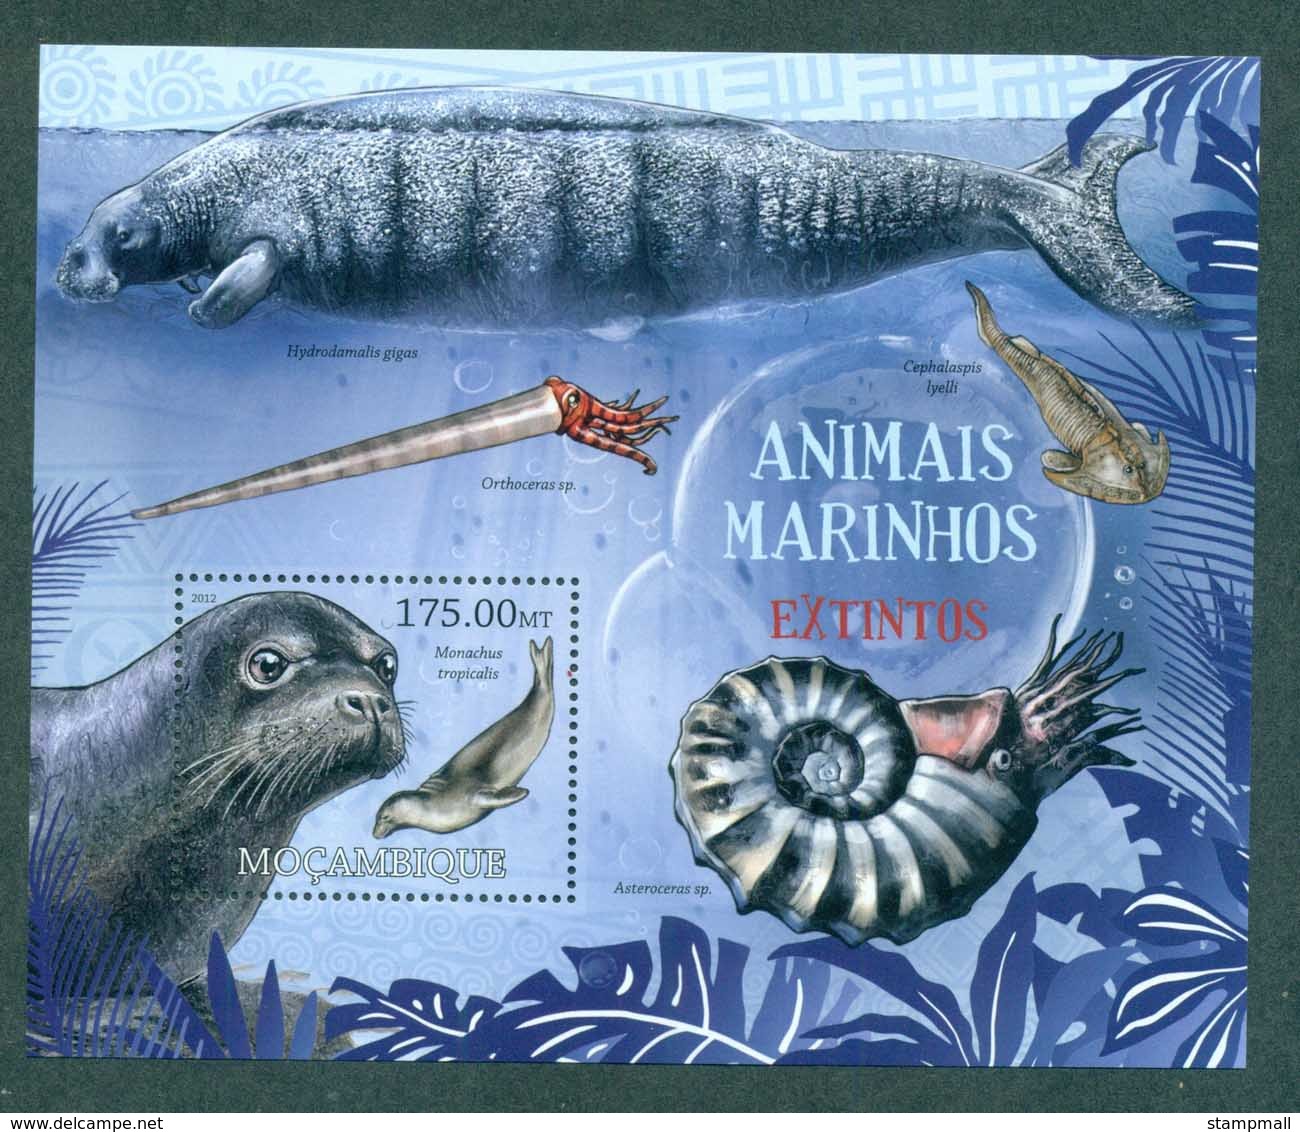 Mozambique 2012 Wildlife, Endangered, Extinct, Marine, Seal, Manatee, Dugong, Nautilus, Shell, Squid, MS MUH MOZ12222b - Mozambique